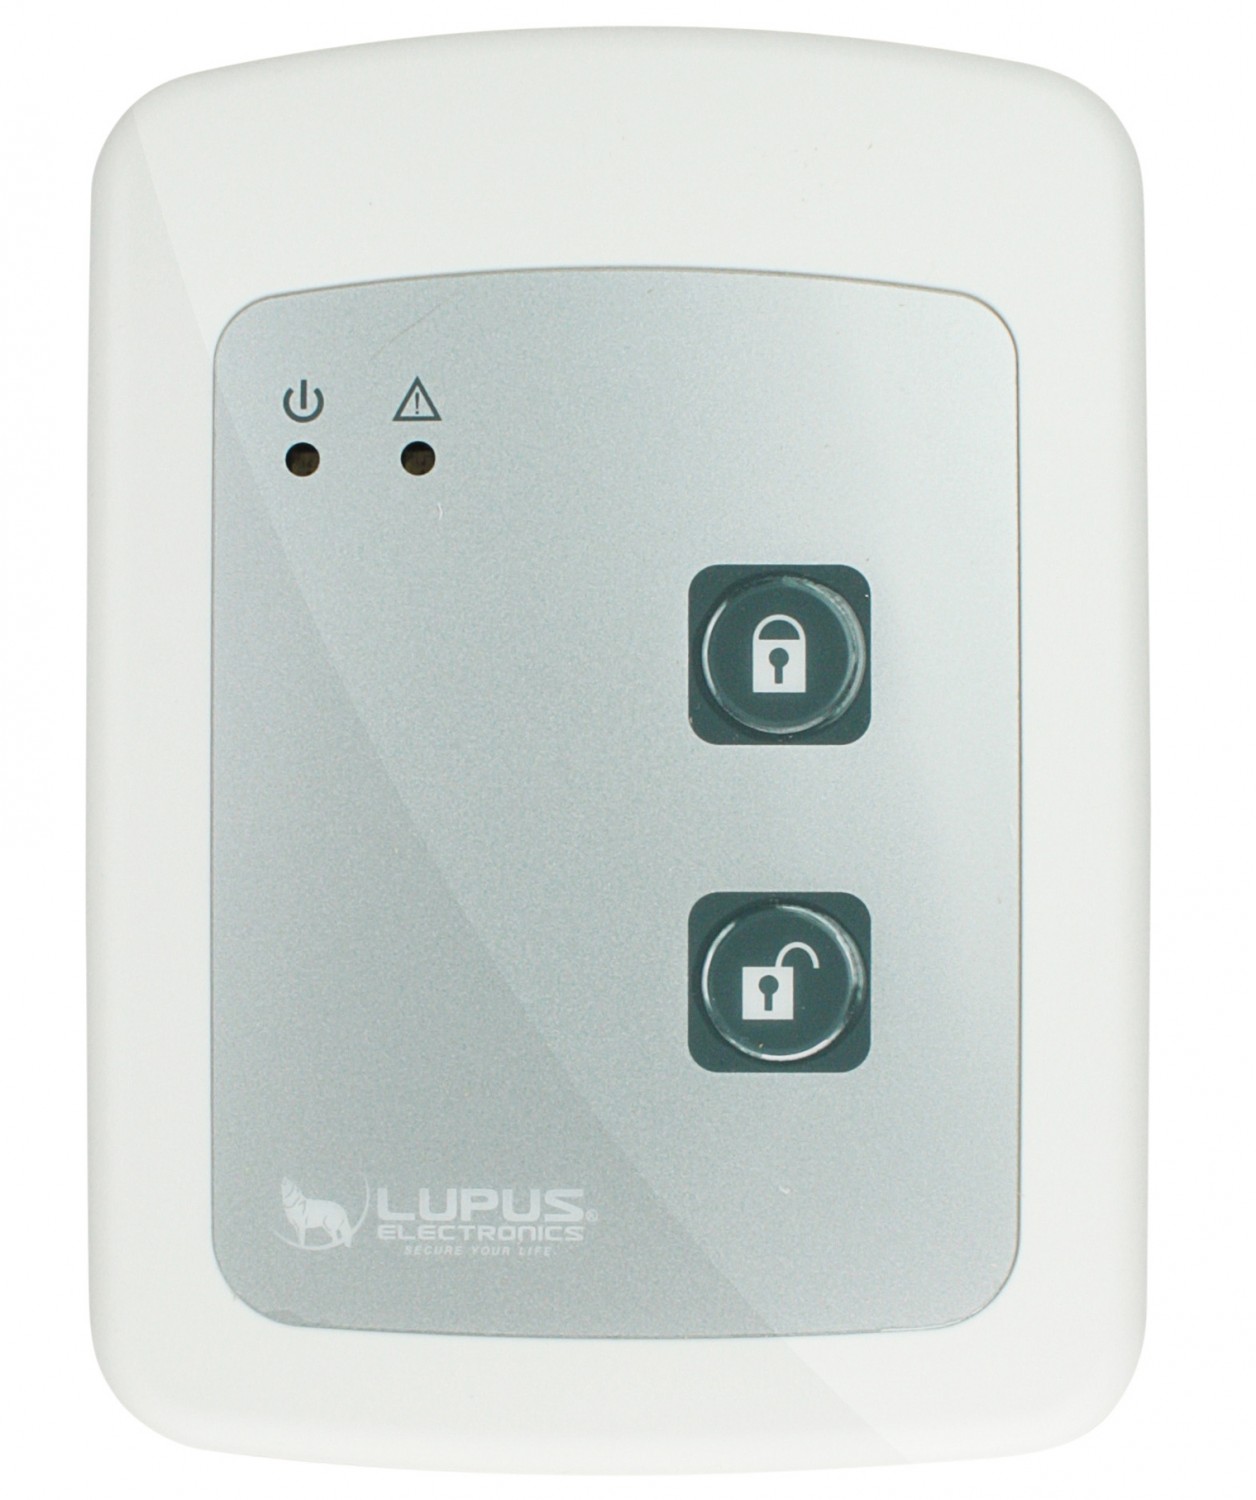 Komplettsysteme (Smart Home) Lupusec Smart-Home-System im Test, Bild 3